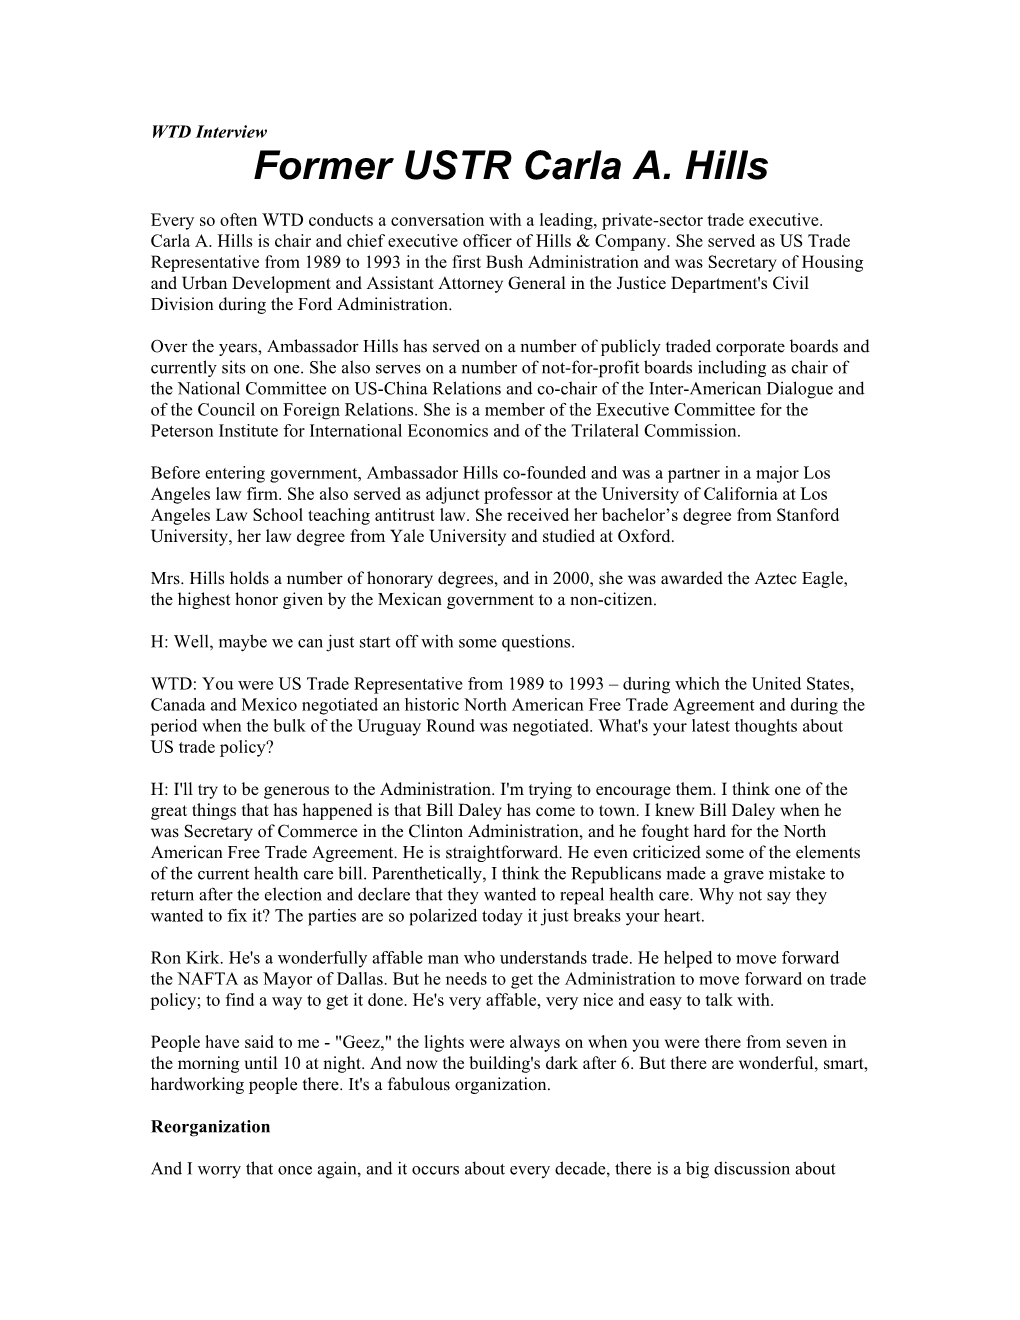 Former USTR Carla A. Hills